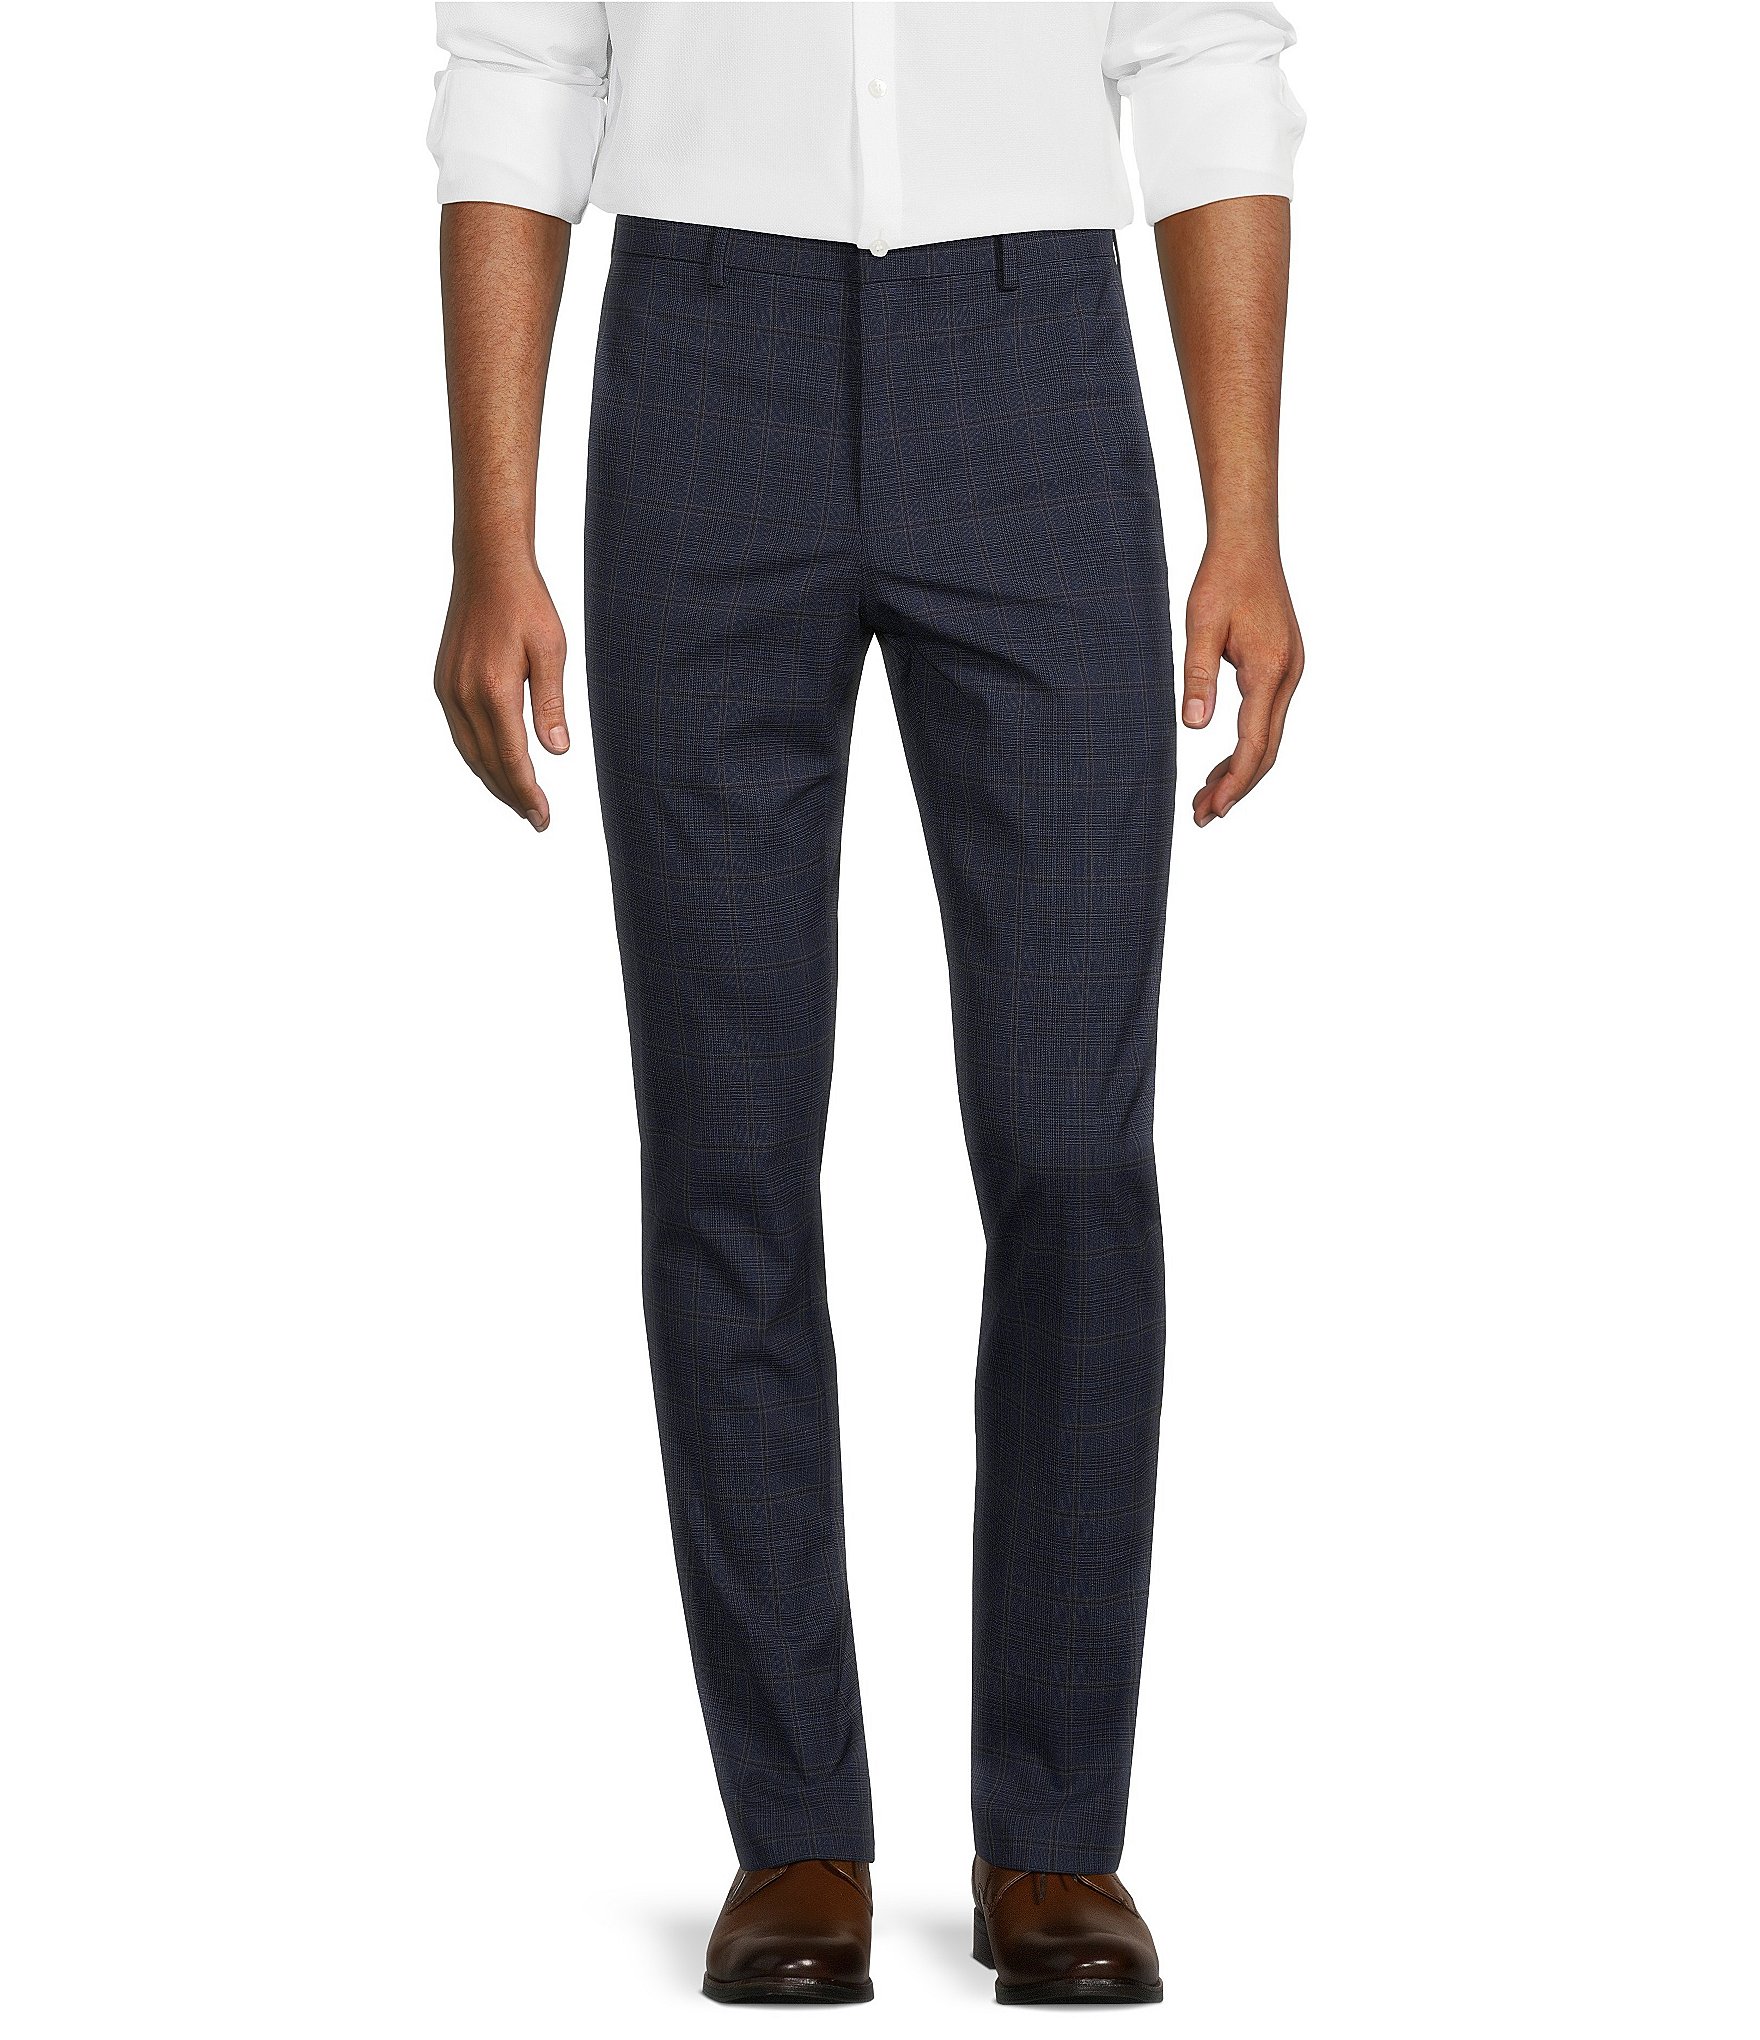 RANIERI SLIM FIT DRESS PANTS (more colors) – Miltons - The Store for Men